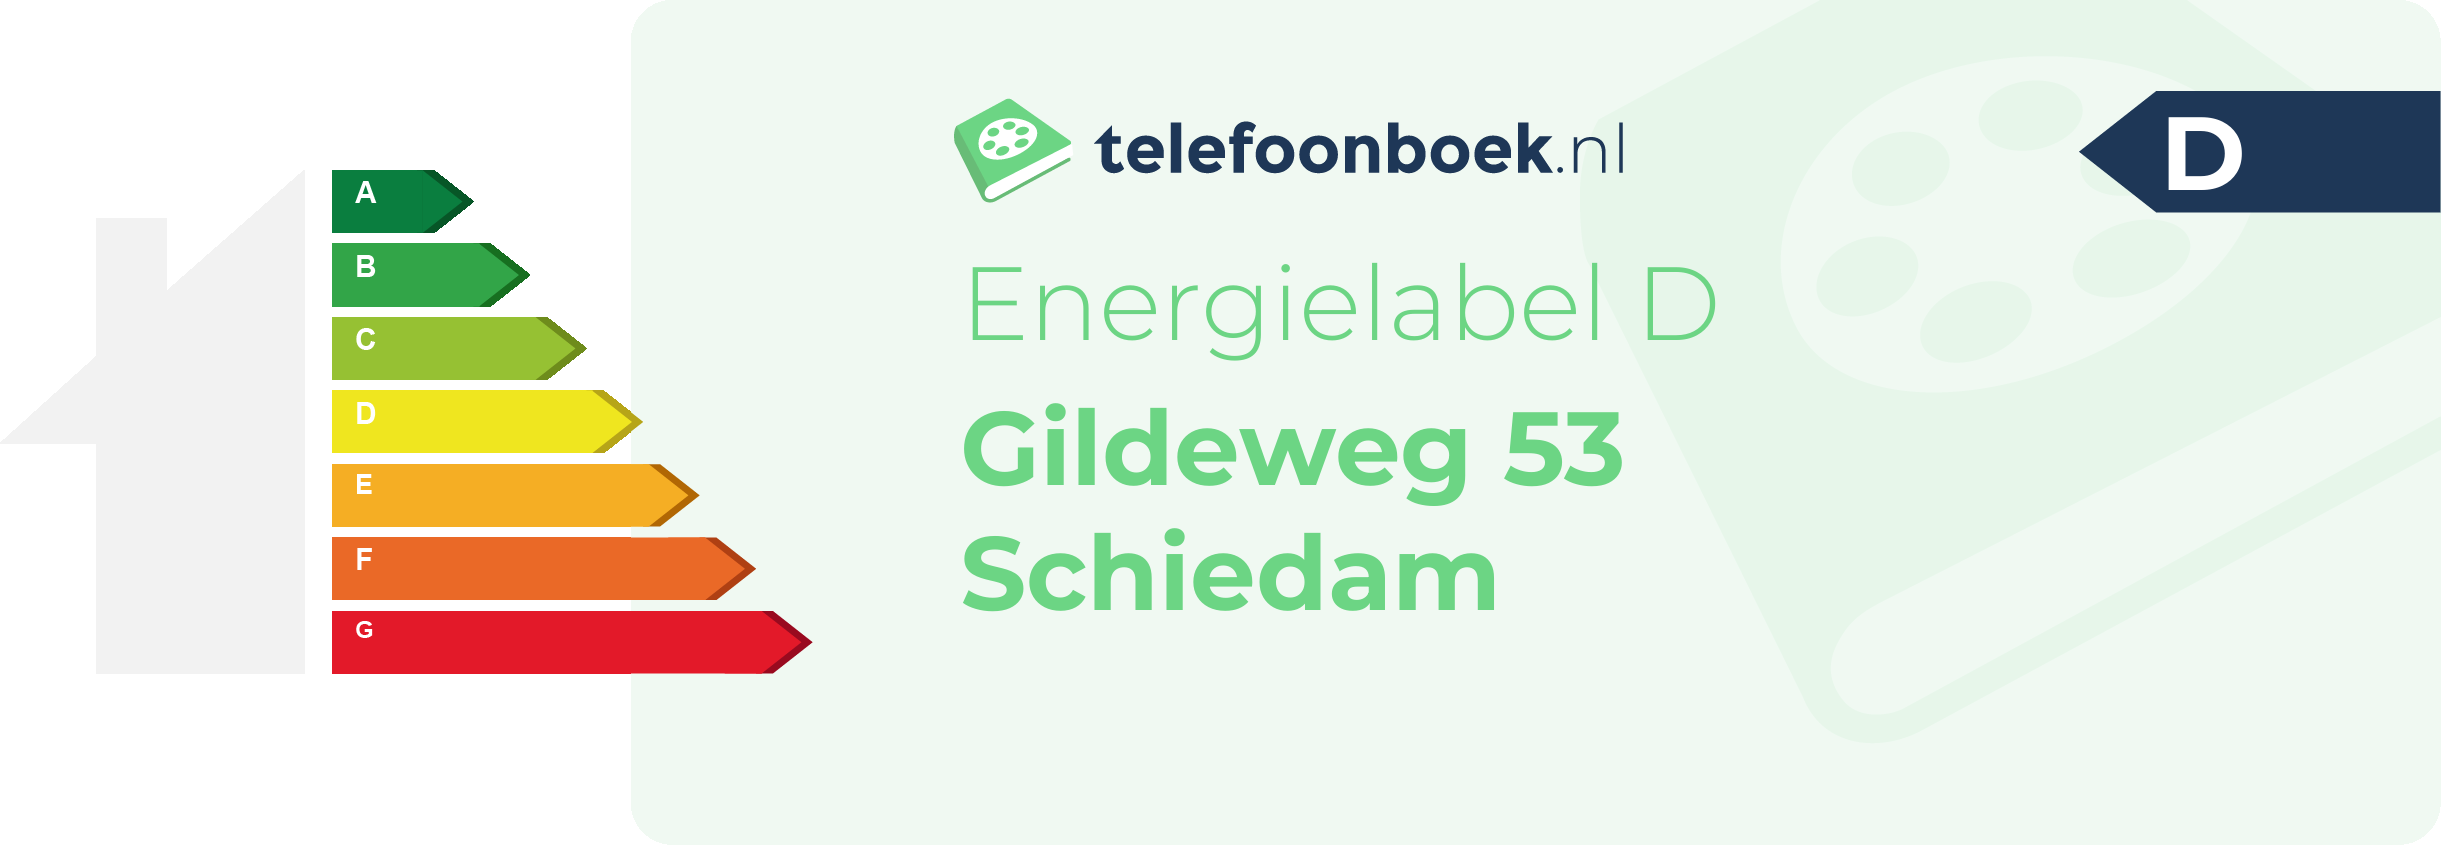 Energielabel Gildeweg 53 Schiedam